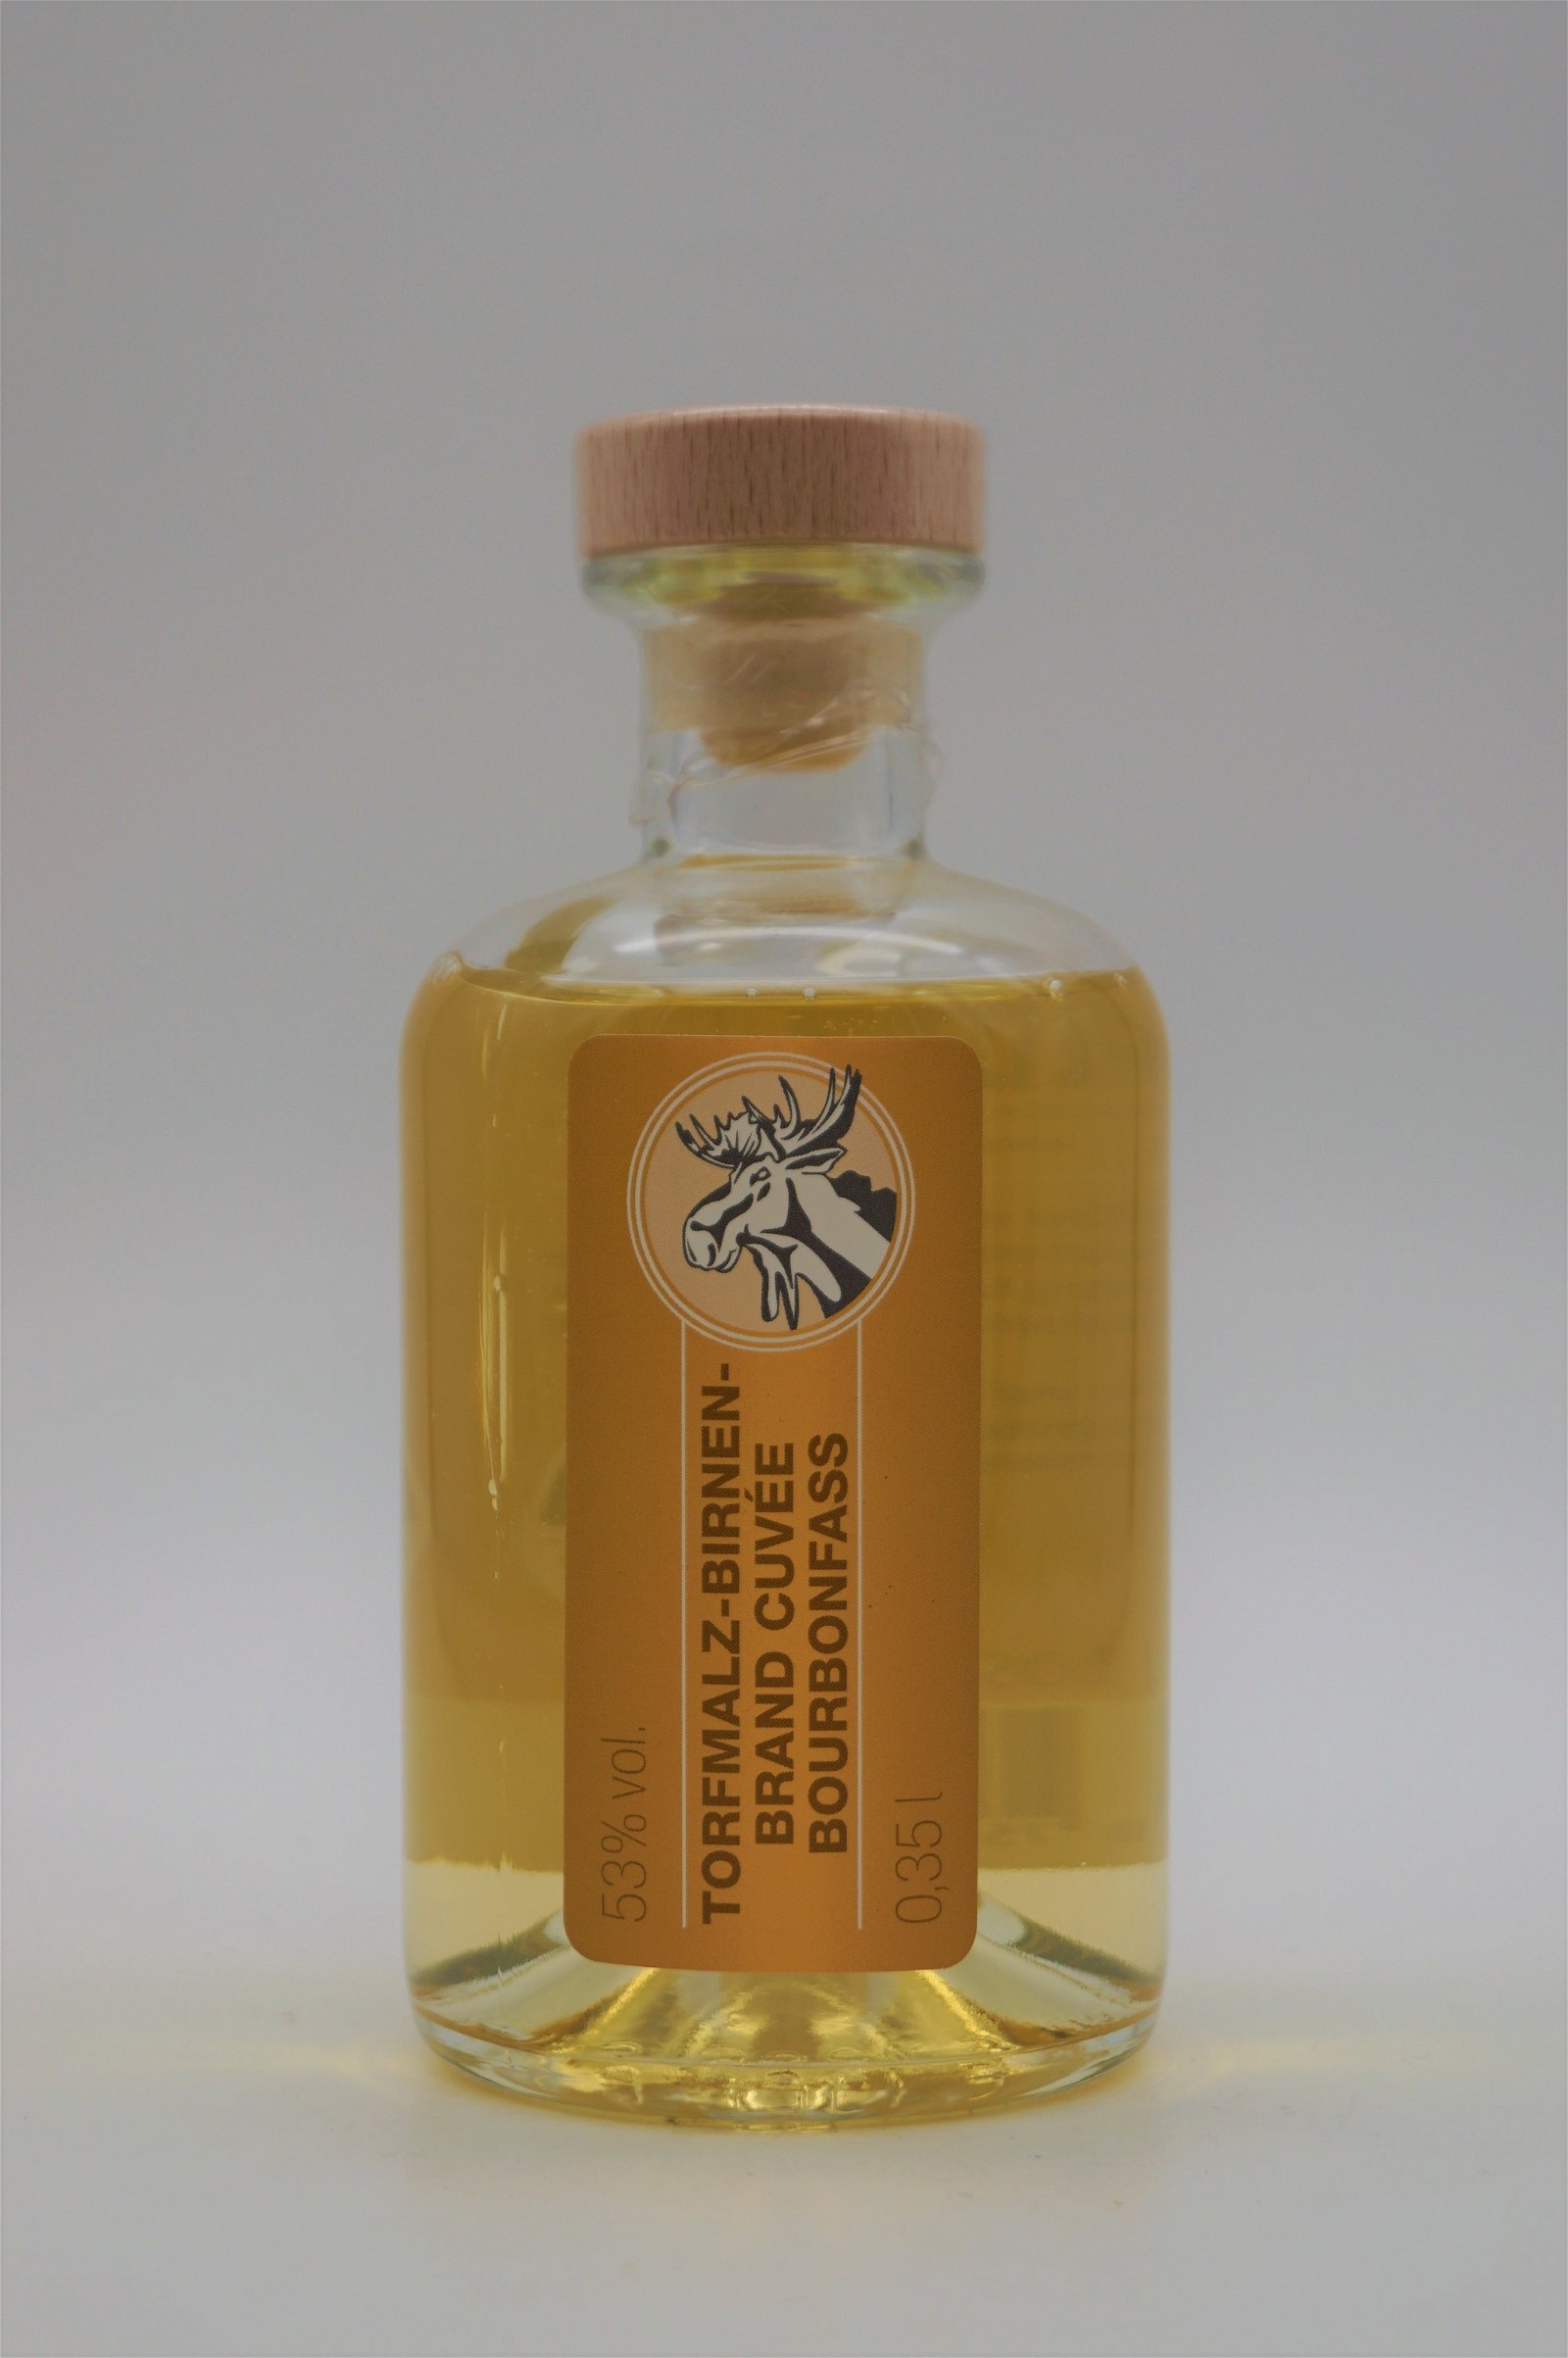 Elch Whisky Torfmalz-Birnenbrand-Cuvee Bourbonfass